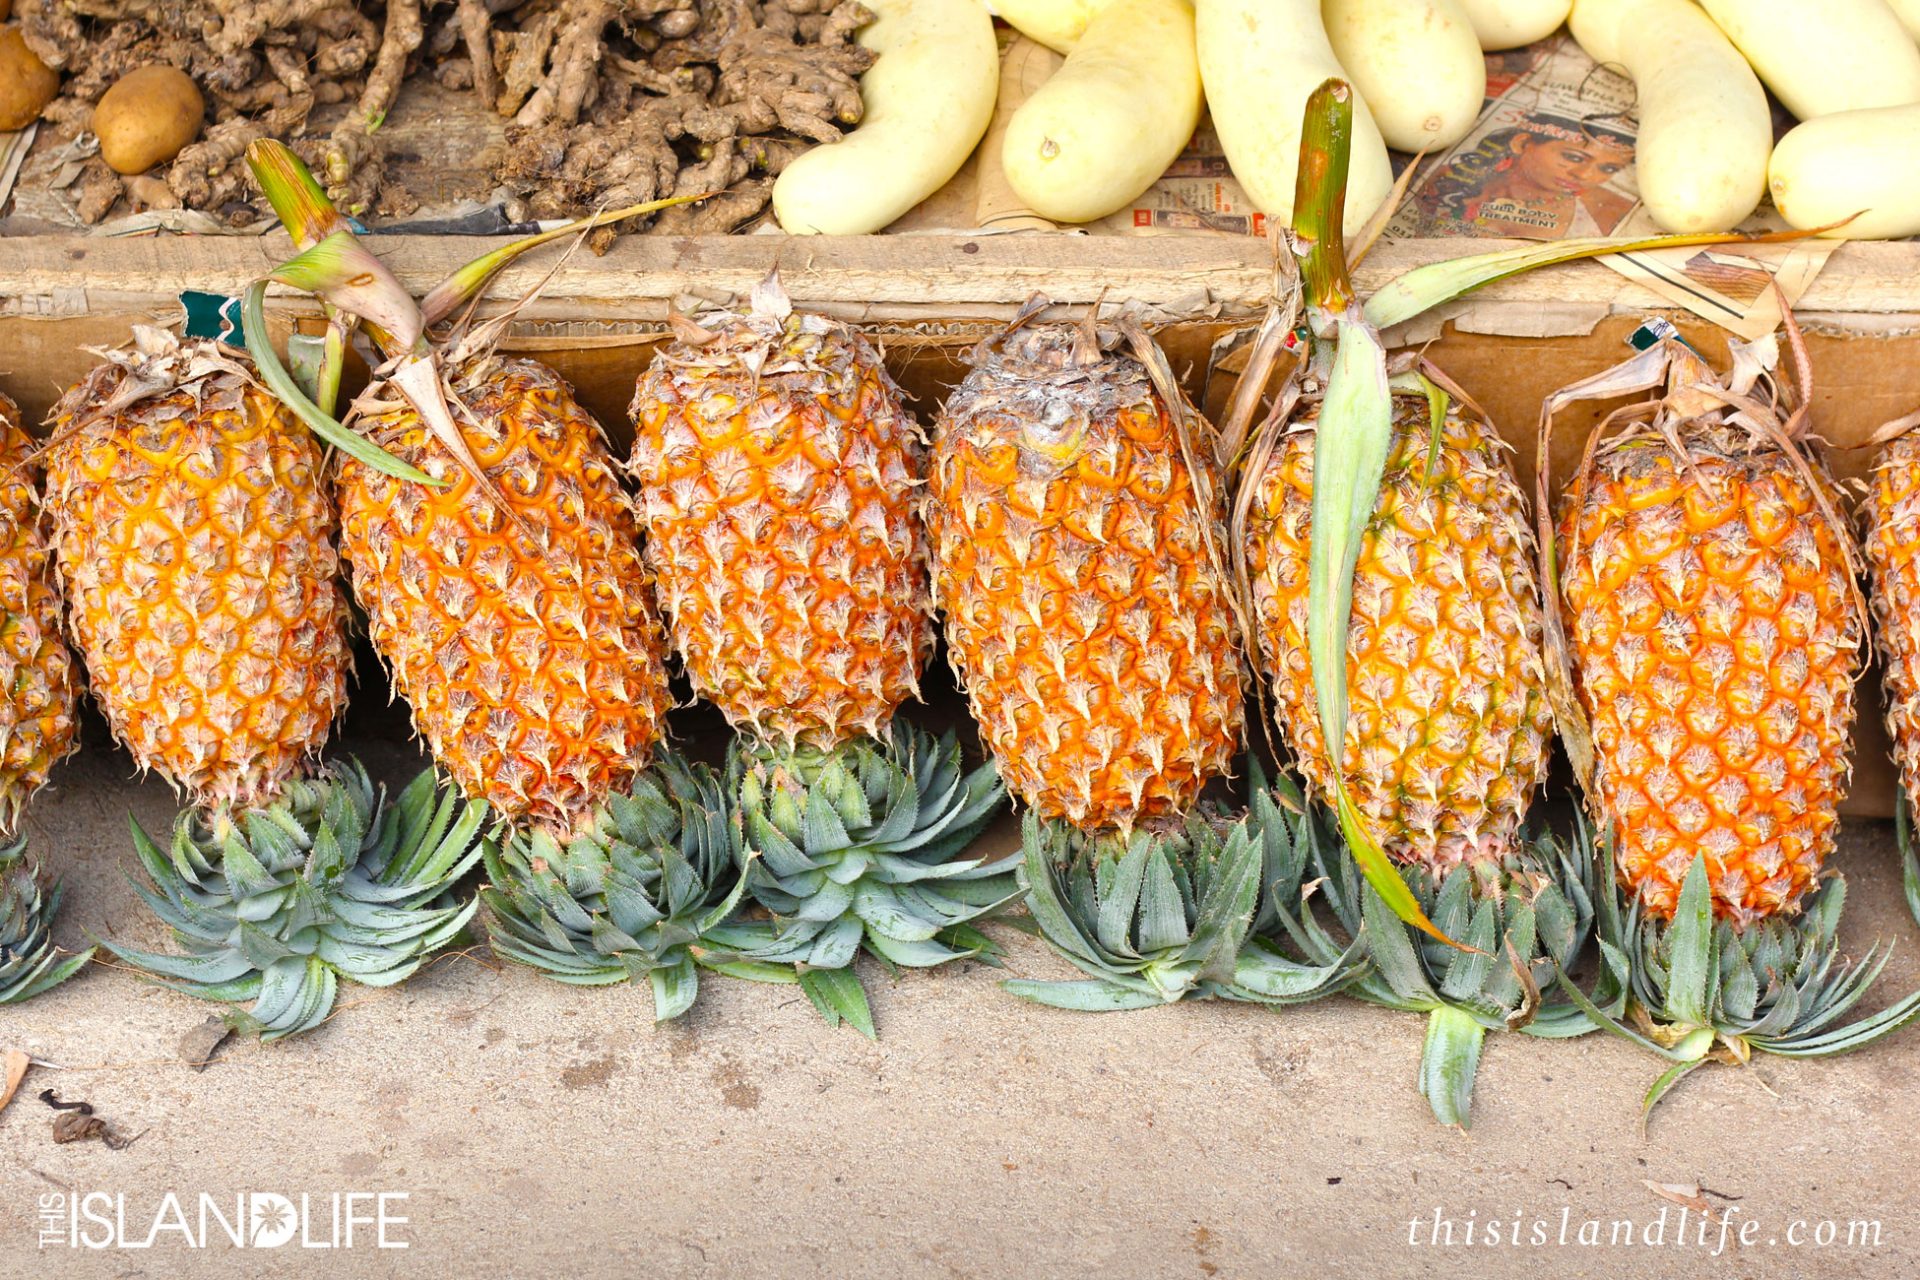 This Island Life | Tropical fruit in Sri Lanka